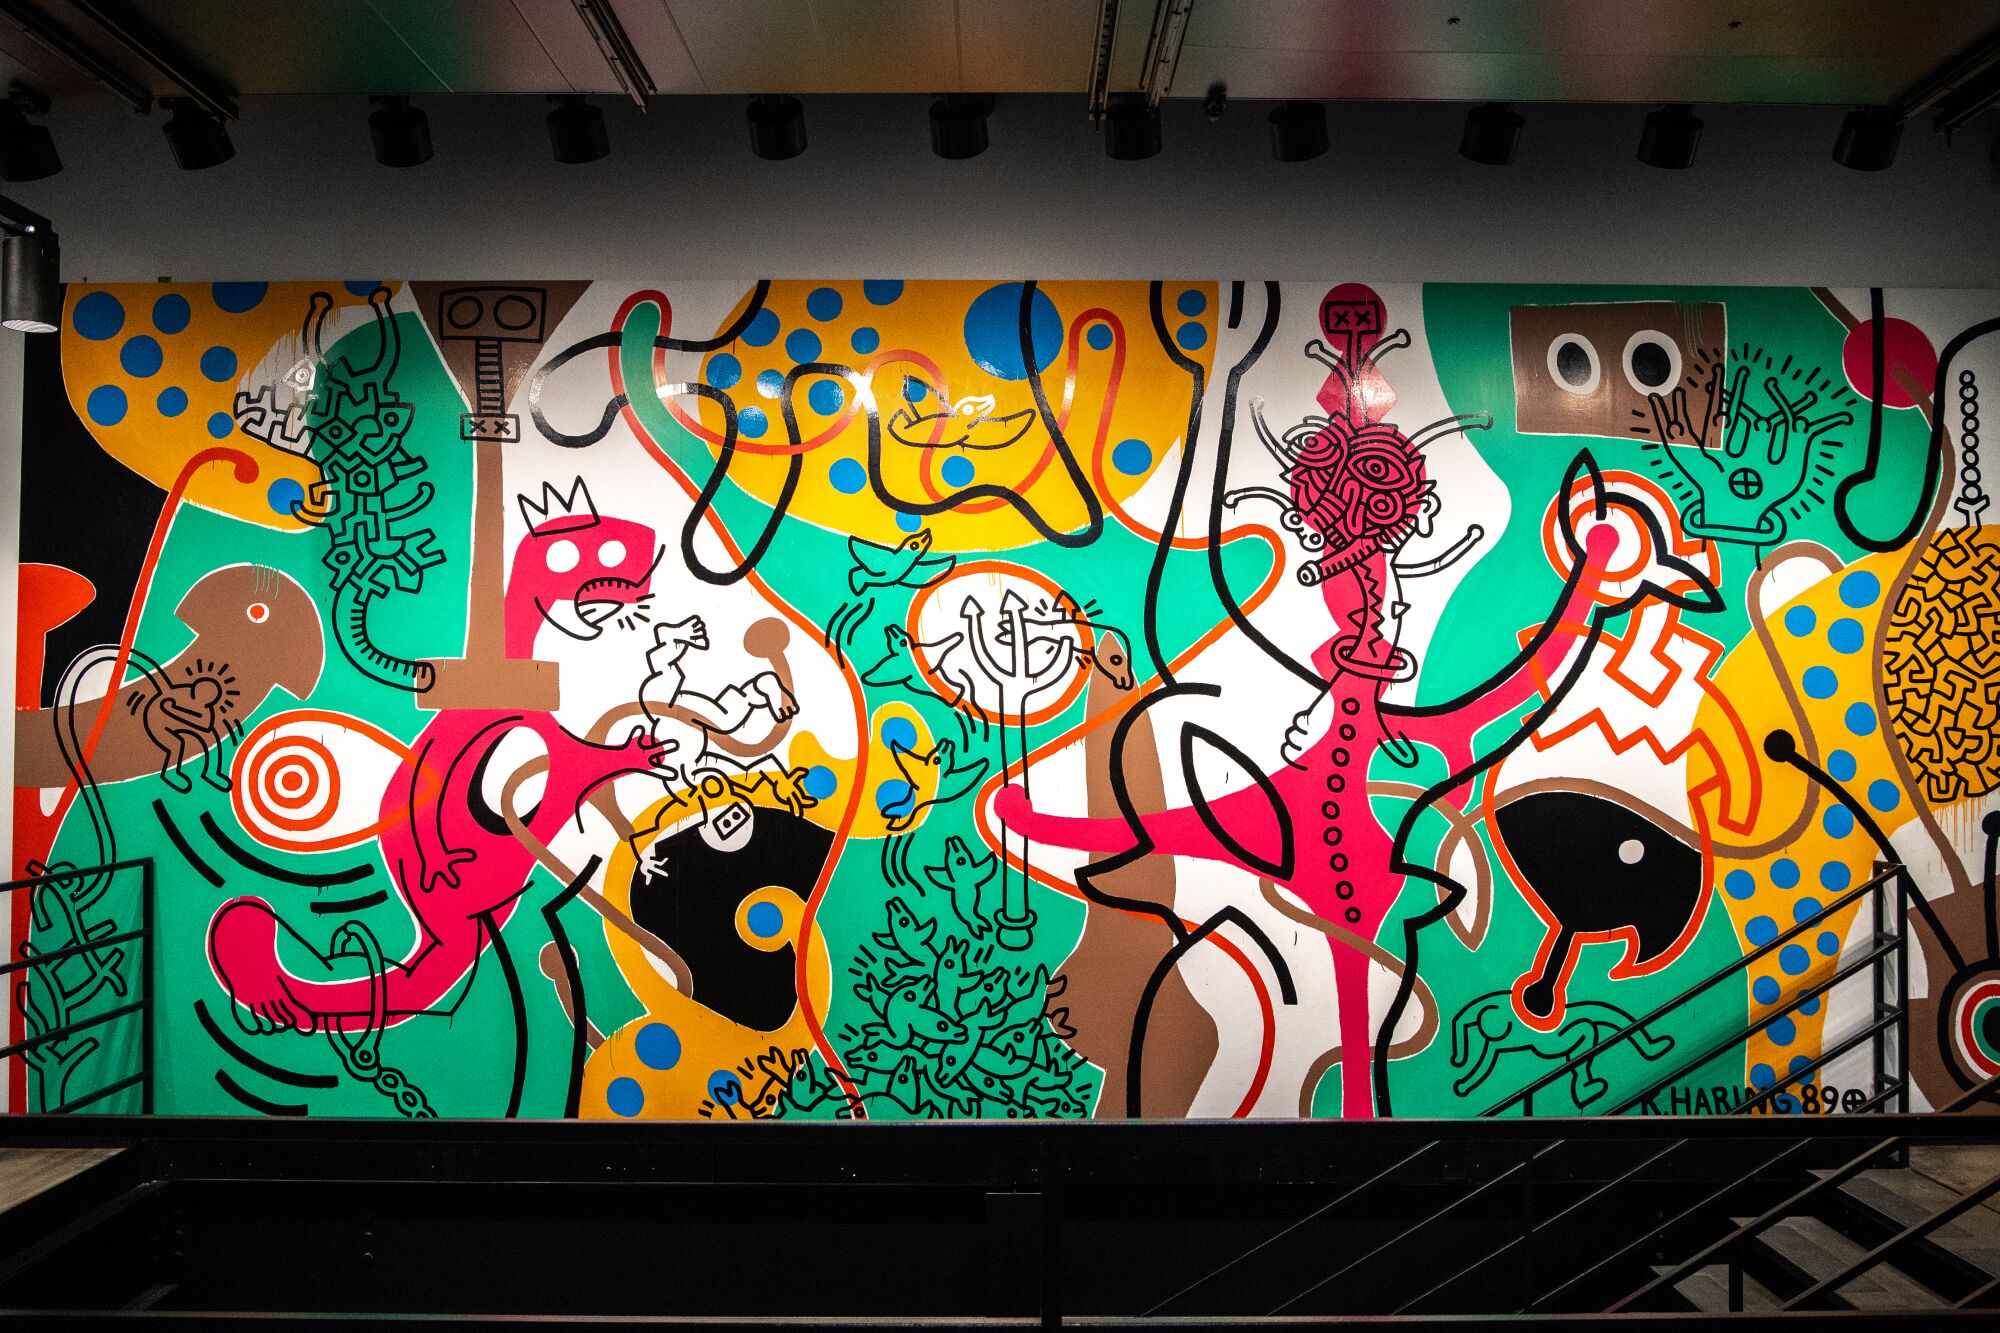 Keith Haring’s Broad exhibit spotlights artwork and activism